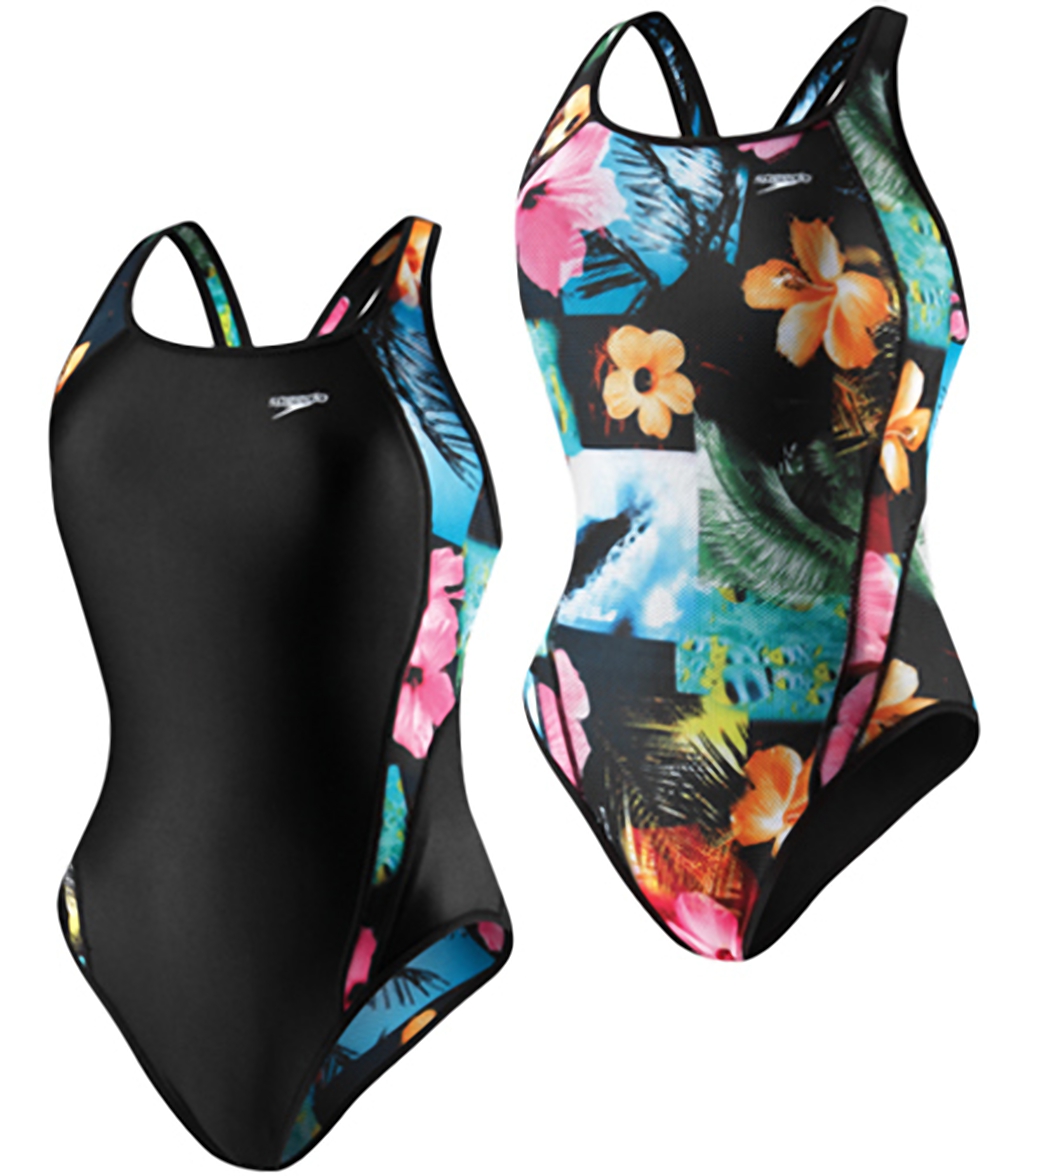 speedo floral swimsuit